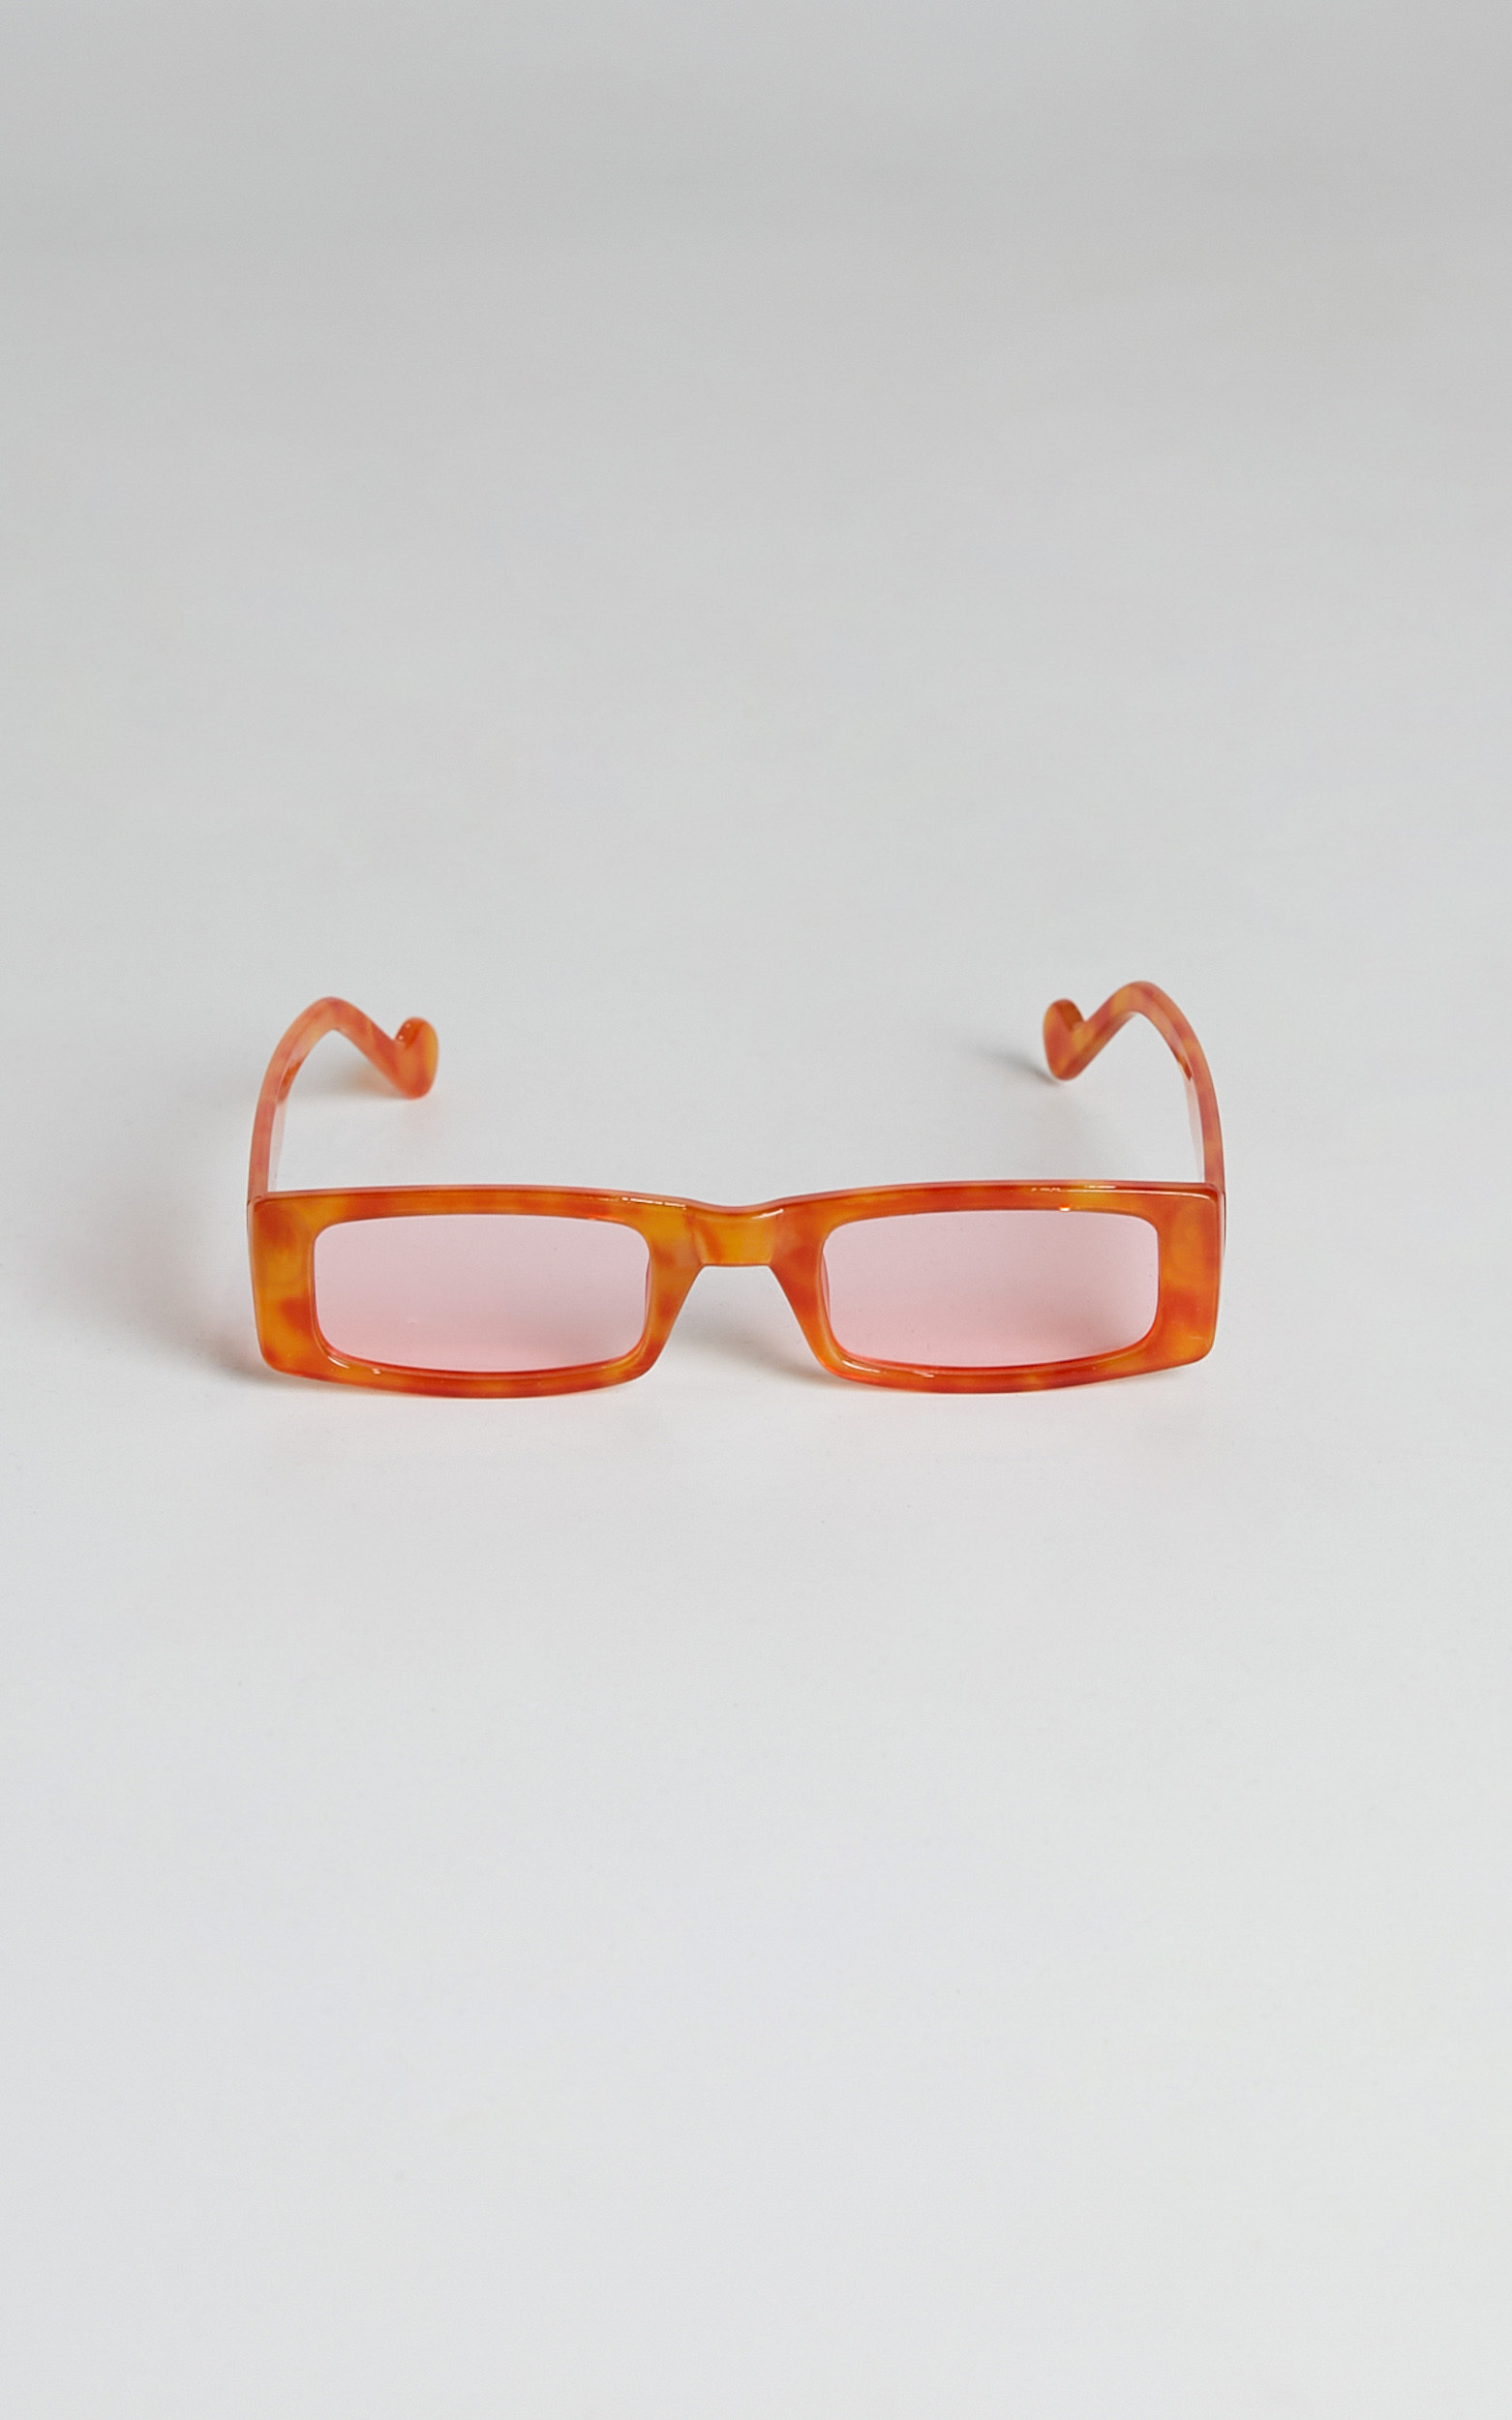 Donna Square Sunglasses in Orange/Pink - NoSize, ORG1, hi-res image number null